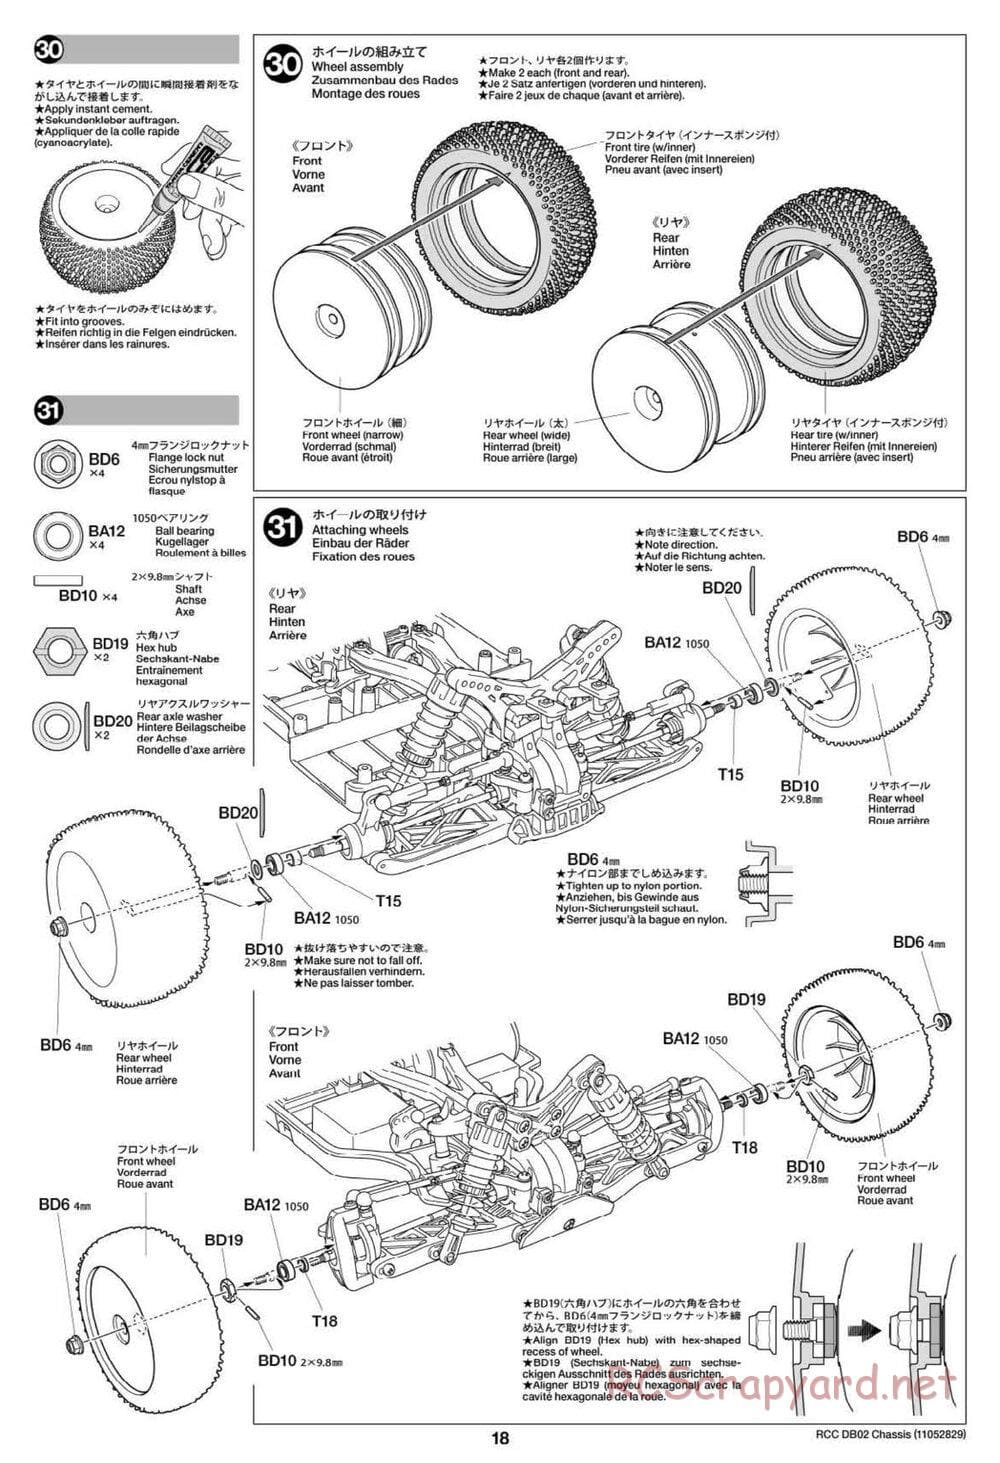 Tamiya - Leonis - DB-02 Chassis - Manual - Page 18